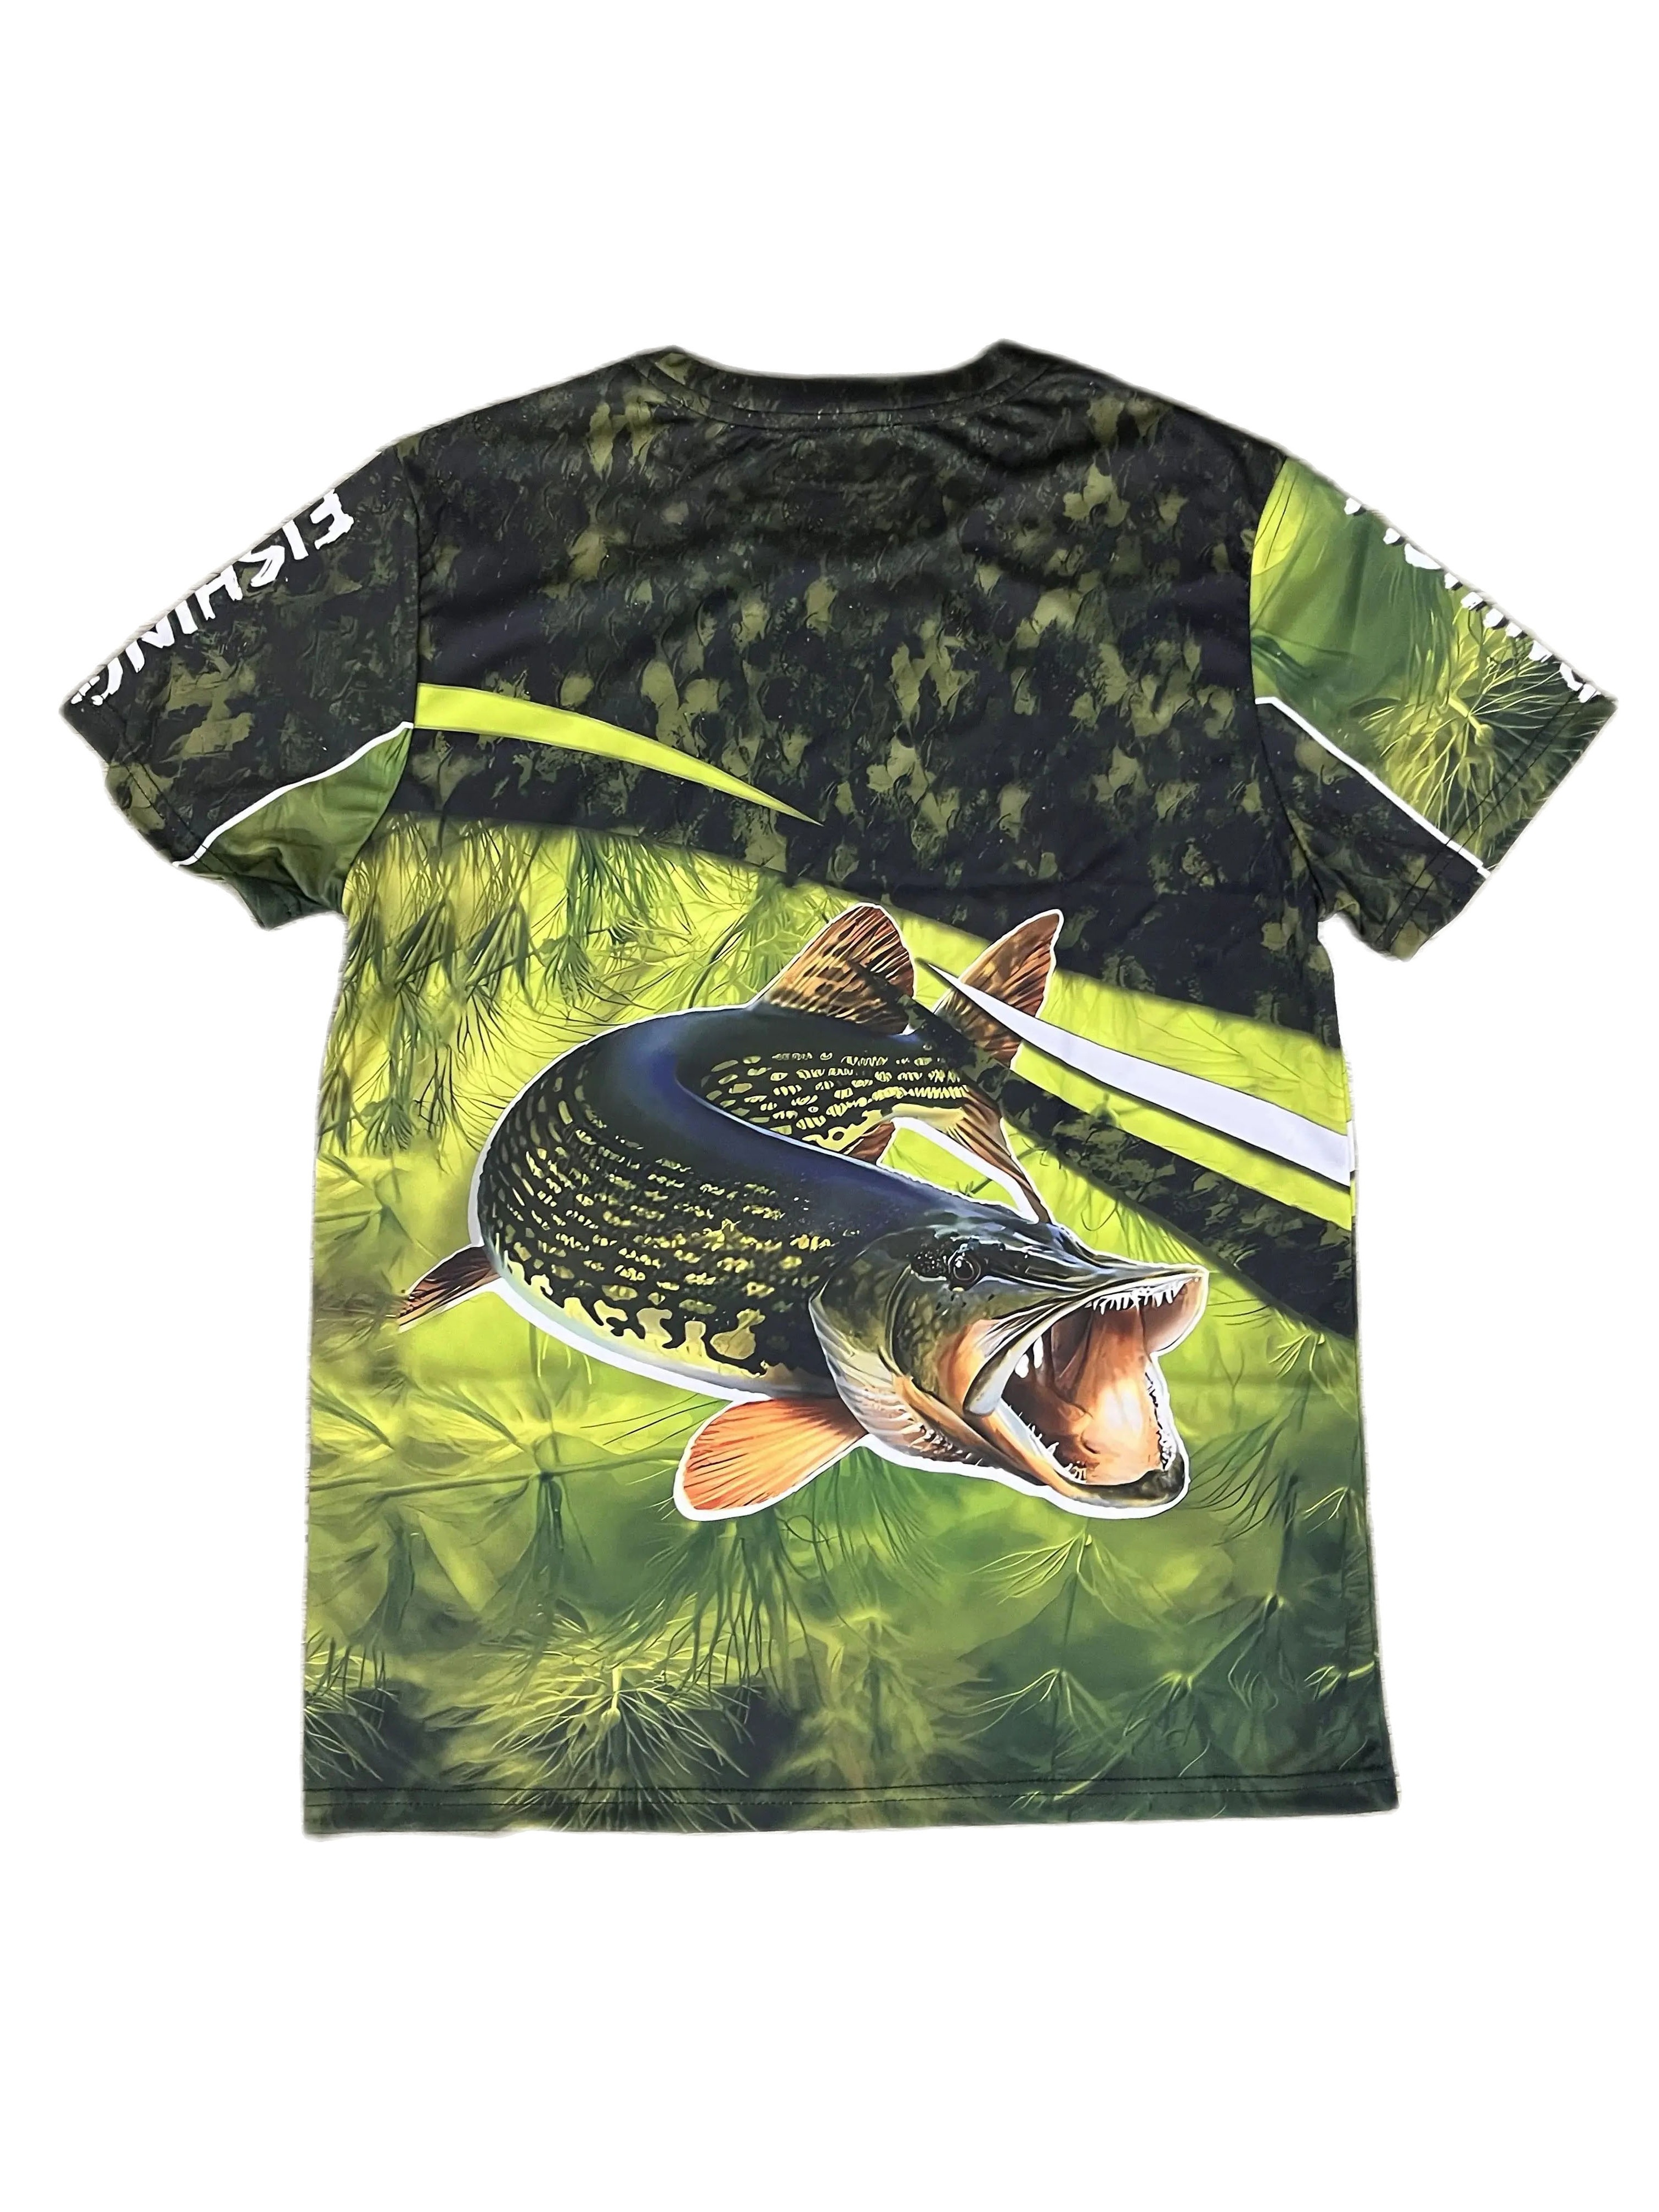 Fish and Forest T-Shirt - Men's Fishing T-Shirts - Fish and Forest Screen  Printed T Shirt - Grey Blended Fabric T-Shirt